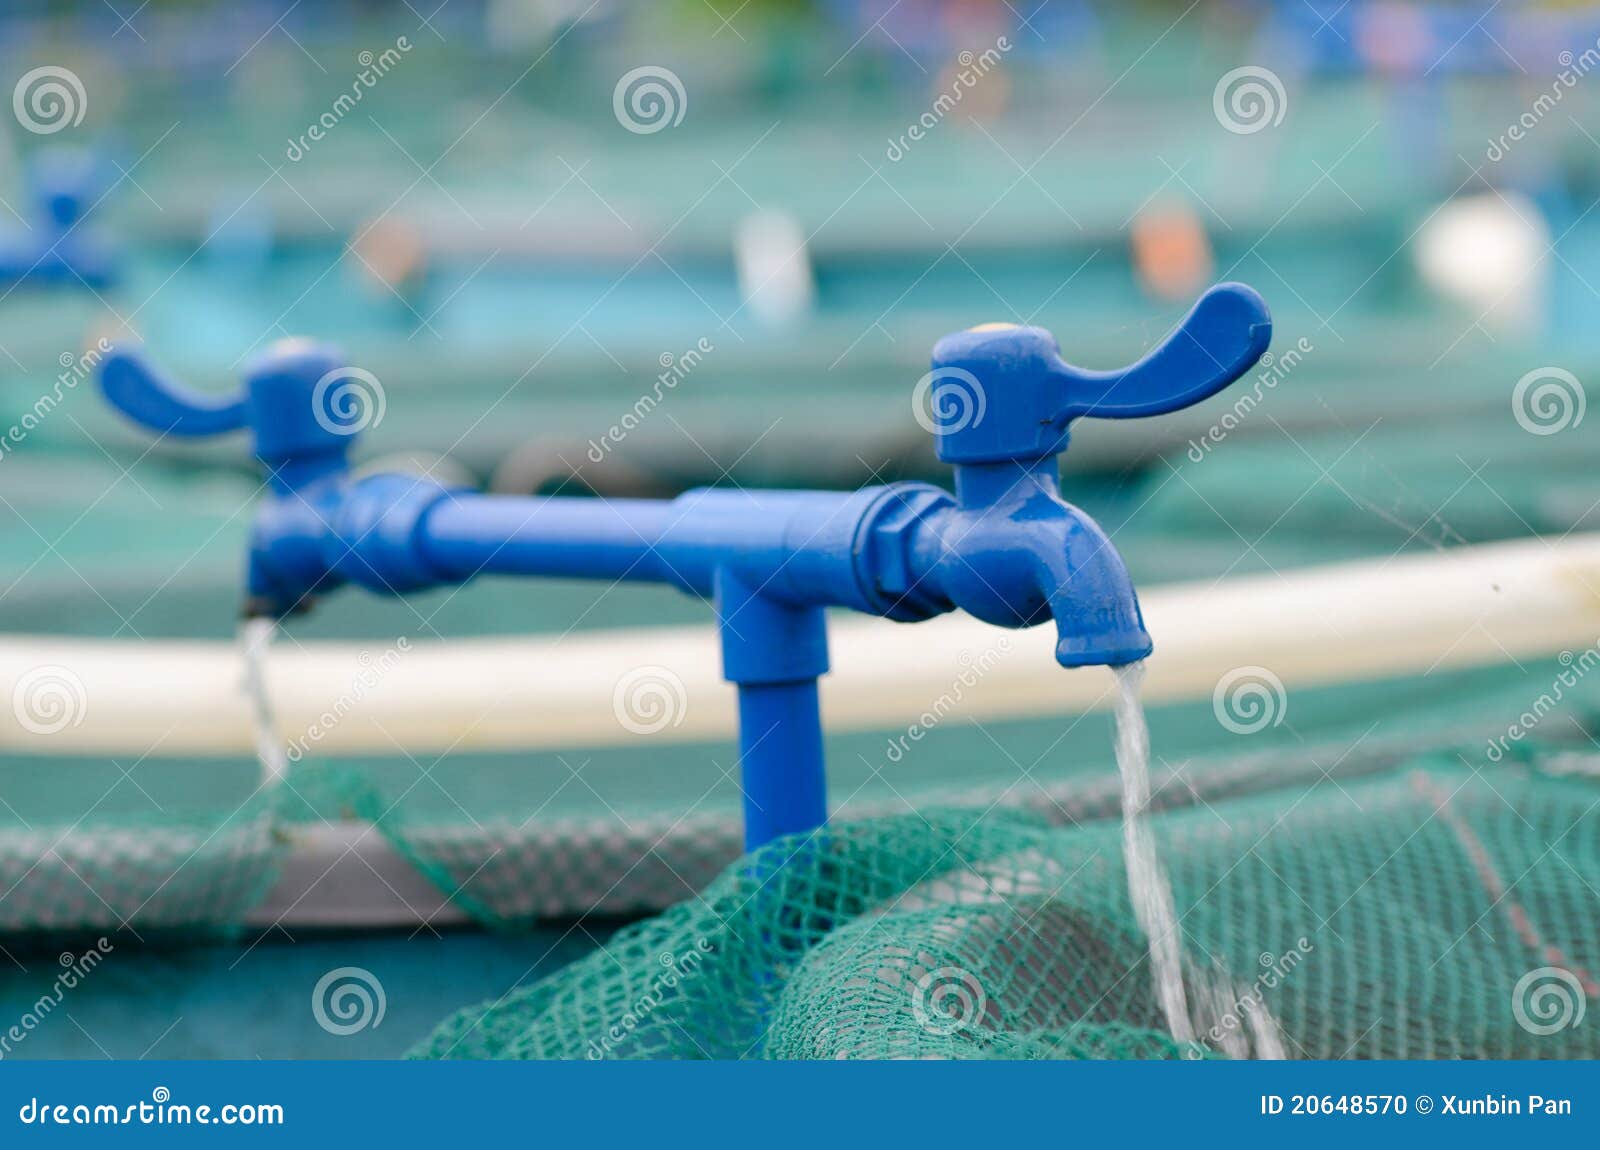 aquaculture water system farm